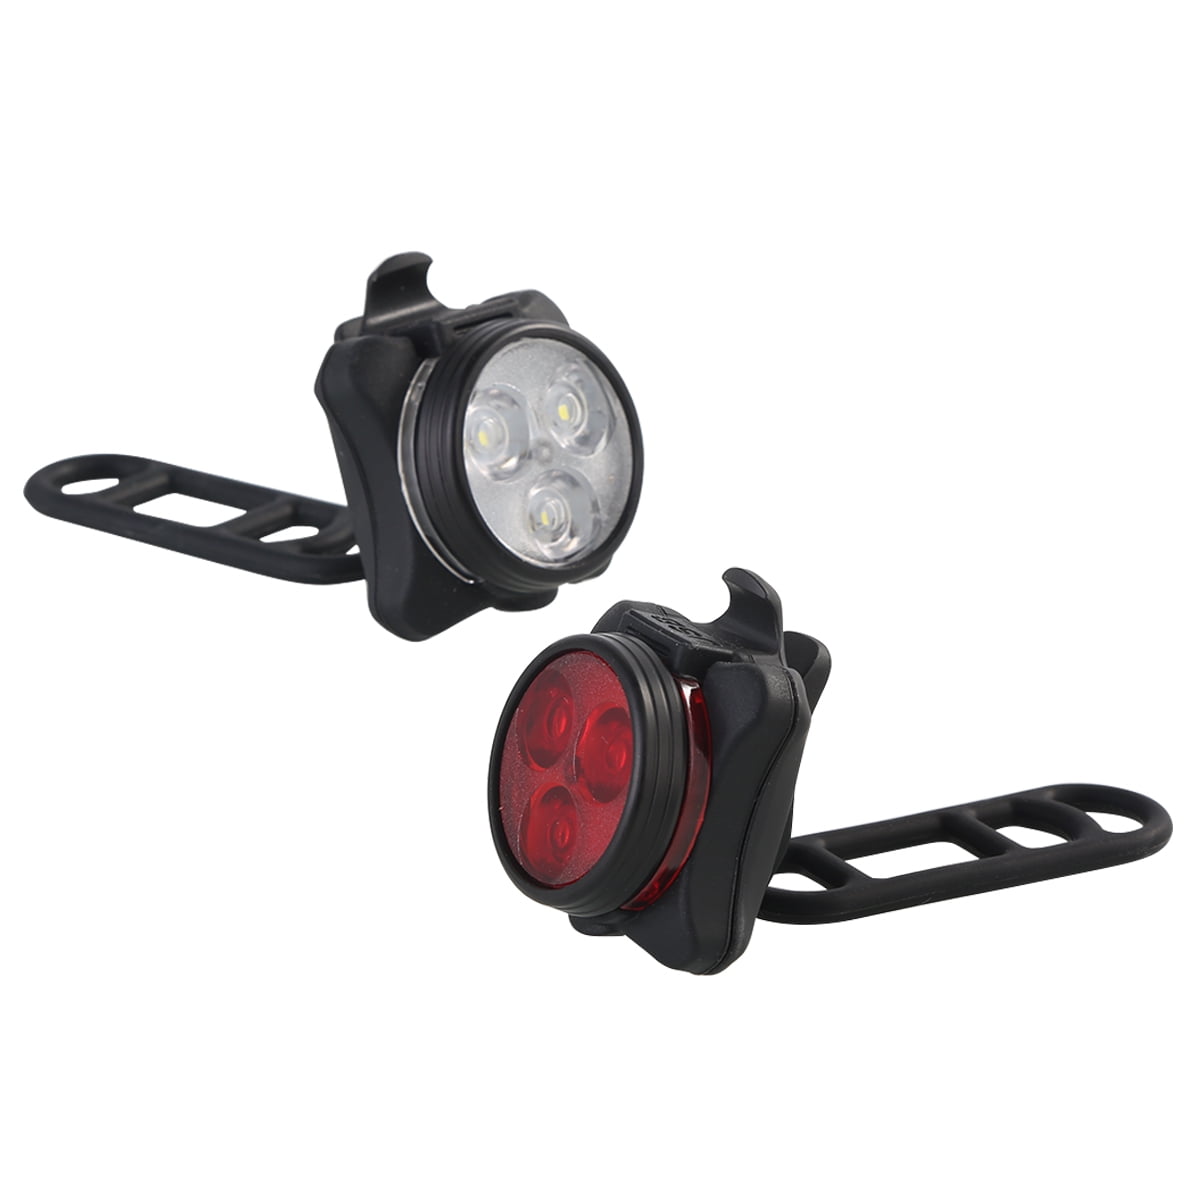 Details about   USB Rechargeable Bike Lights Front Rear Hazard Light Waterproof 5 LED 3 color